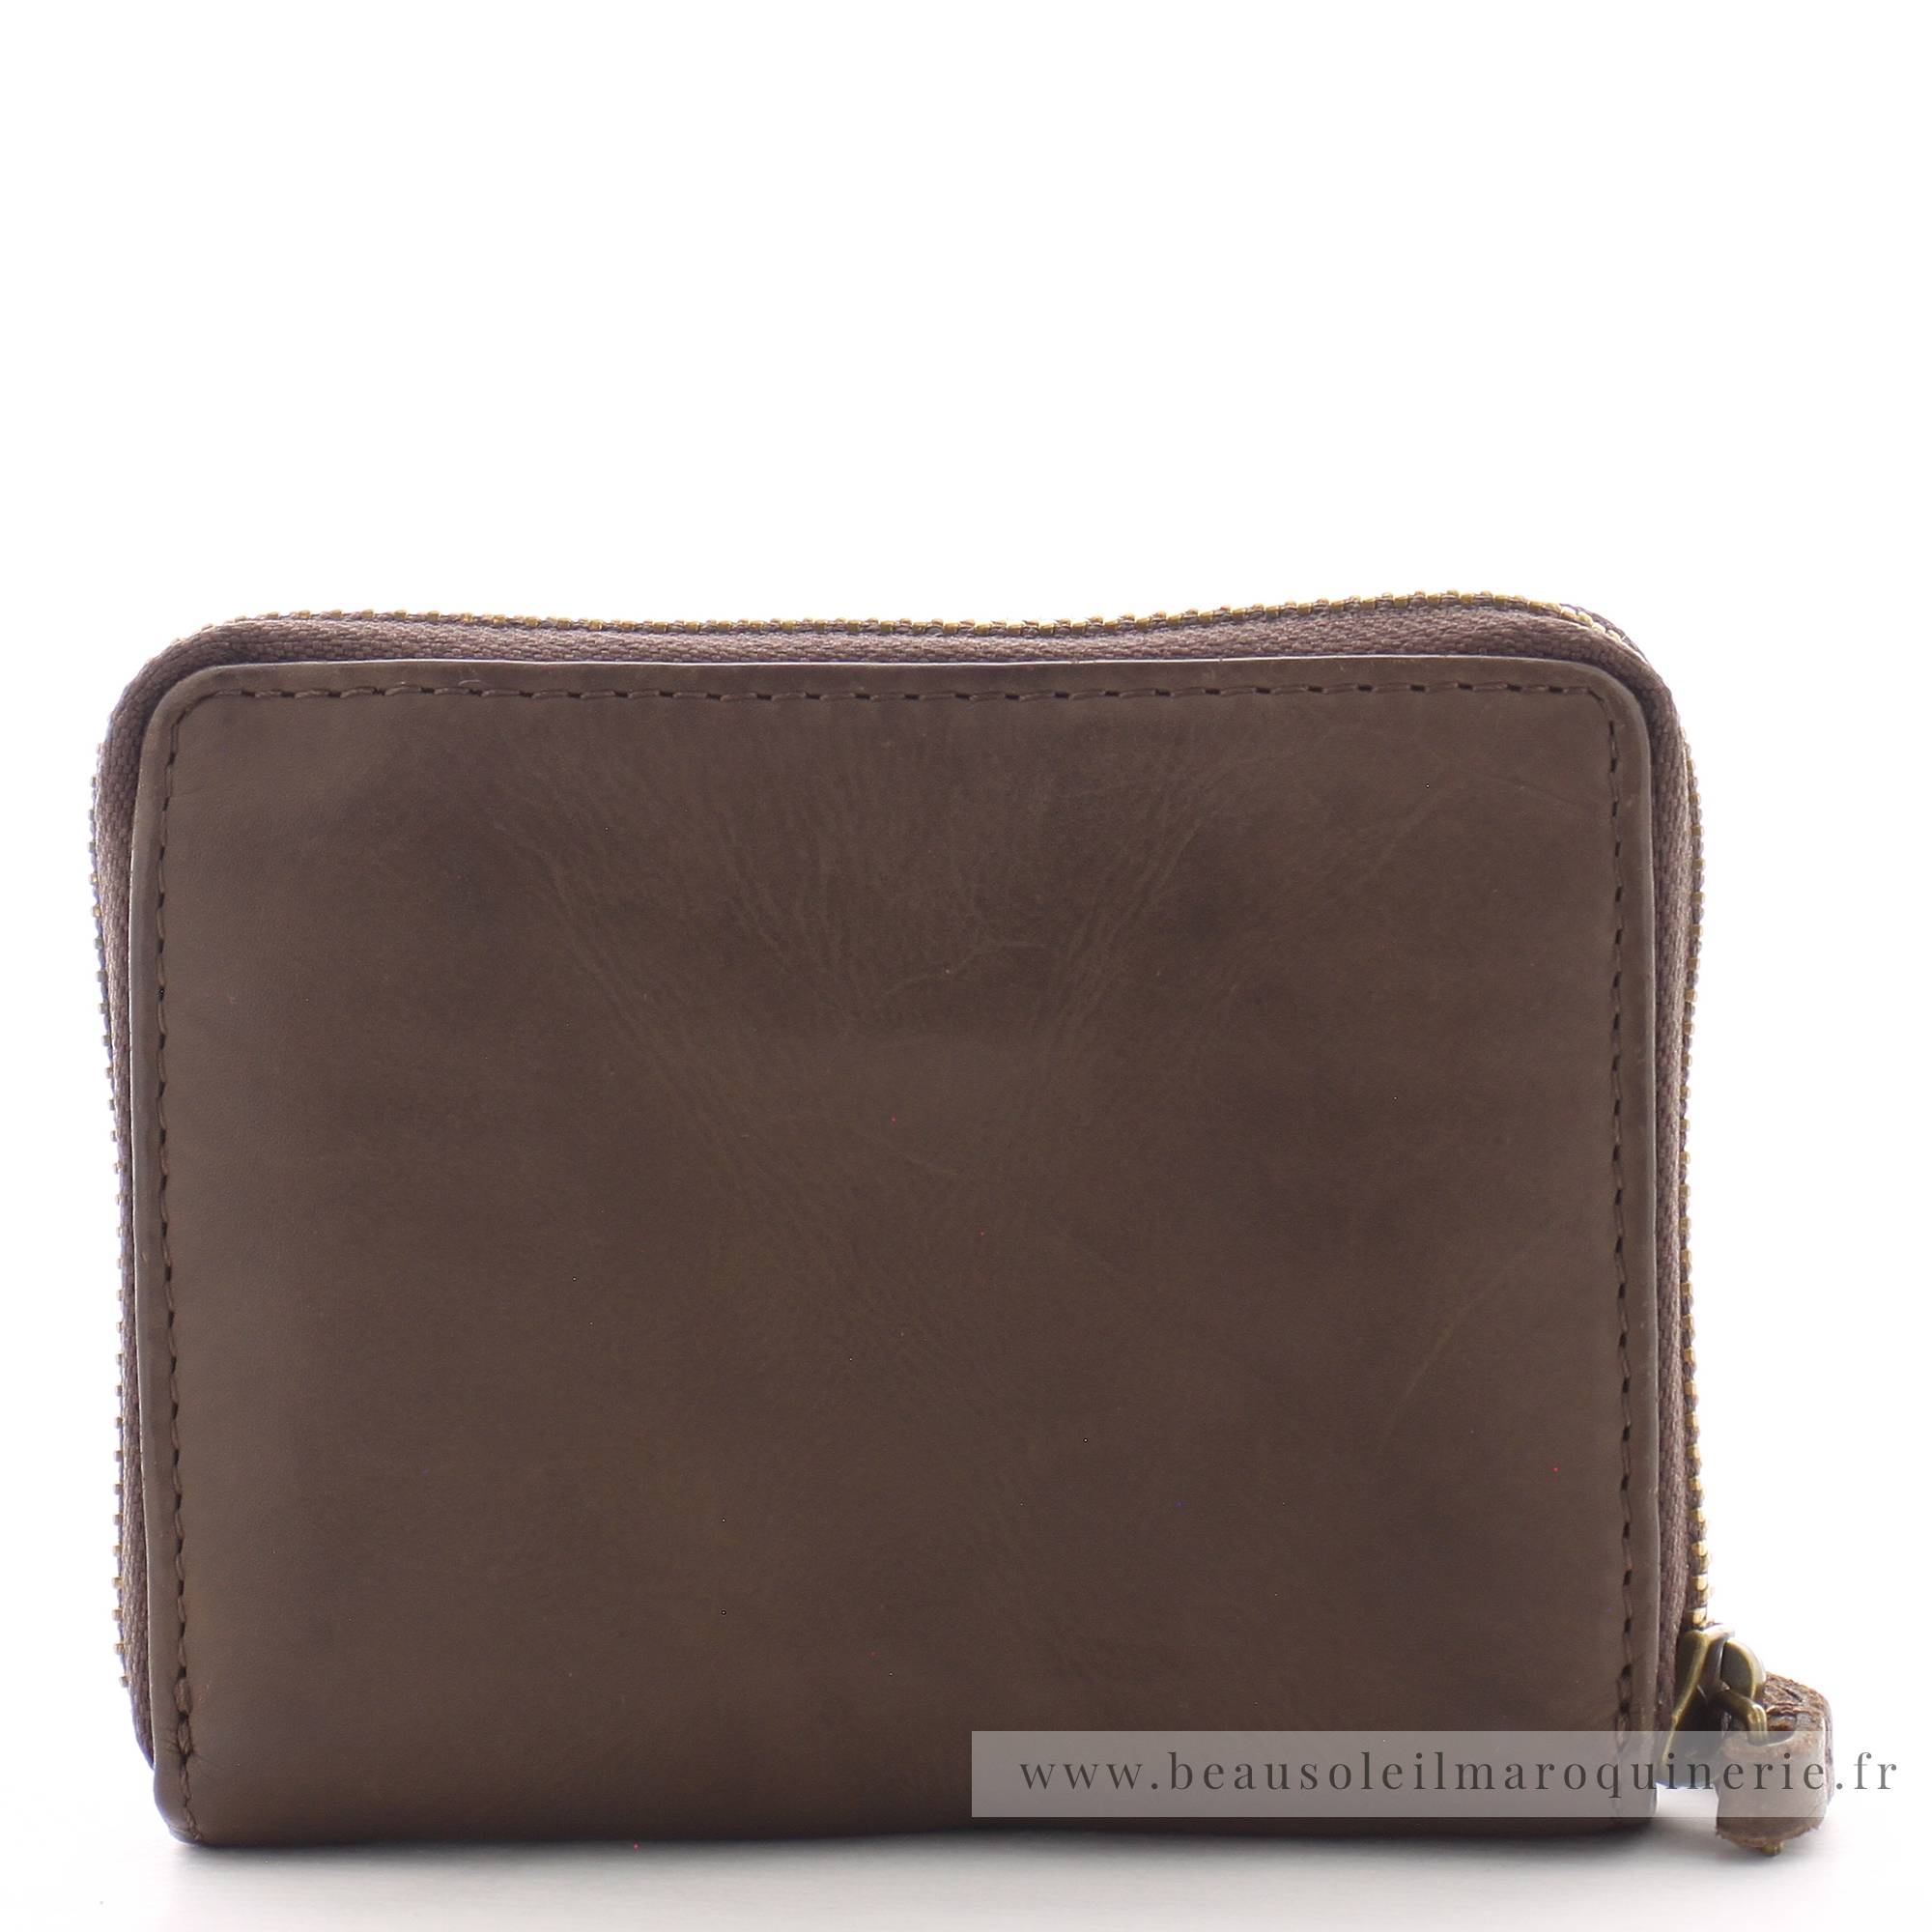 Portefeuille zippé Biba BT11-MARRON couleur marron vue de dos